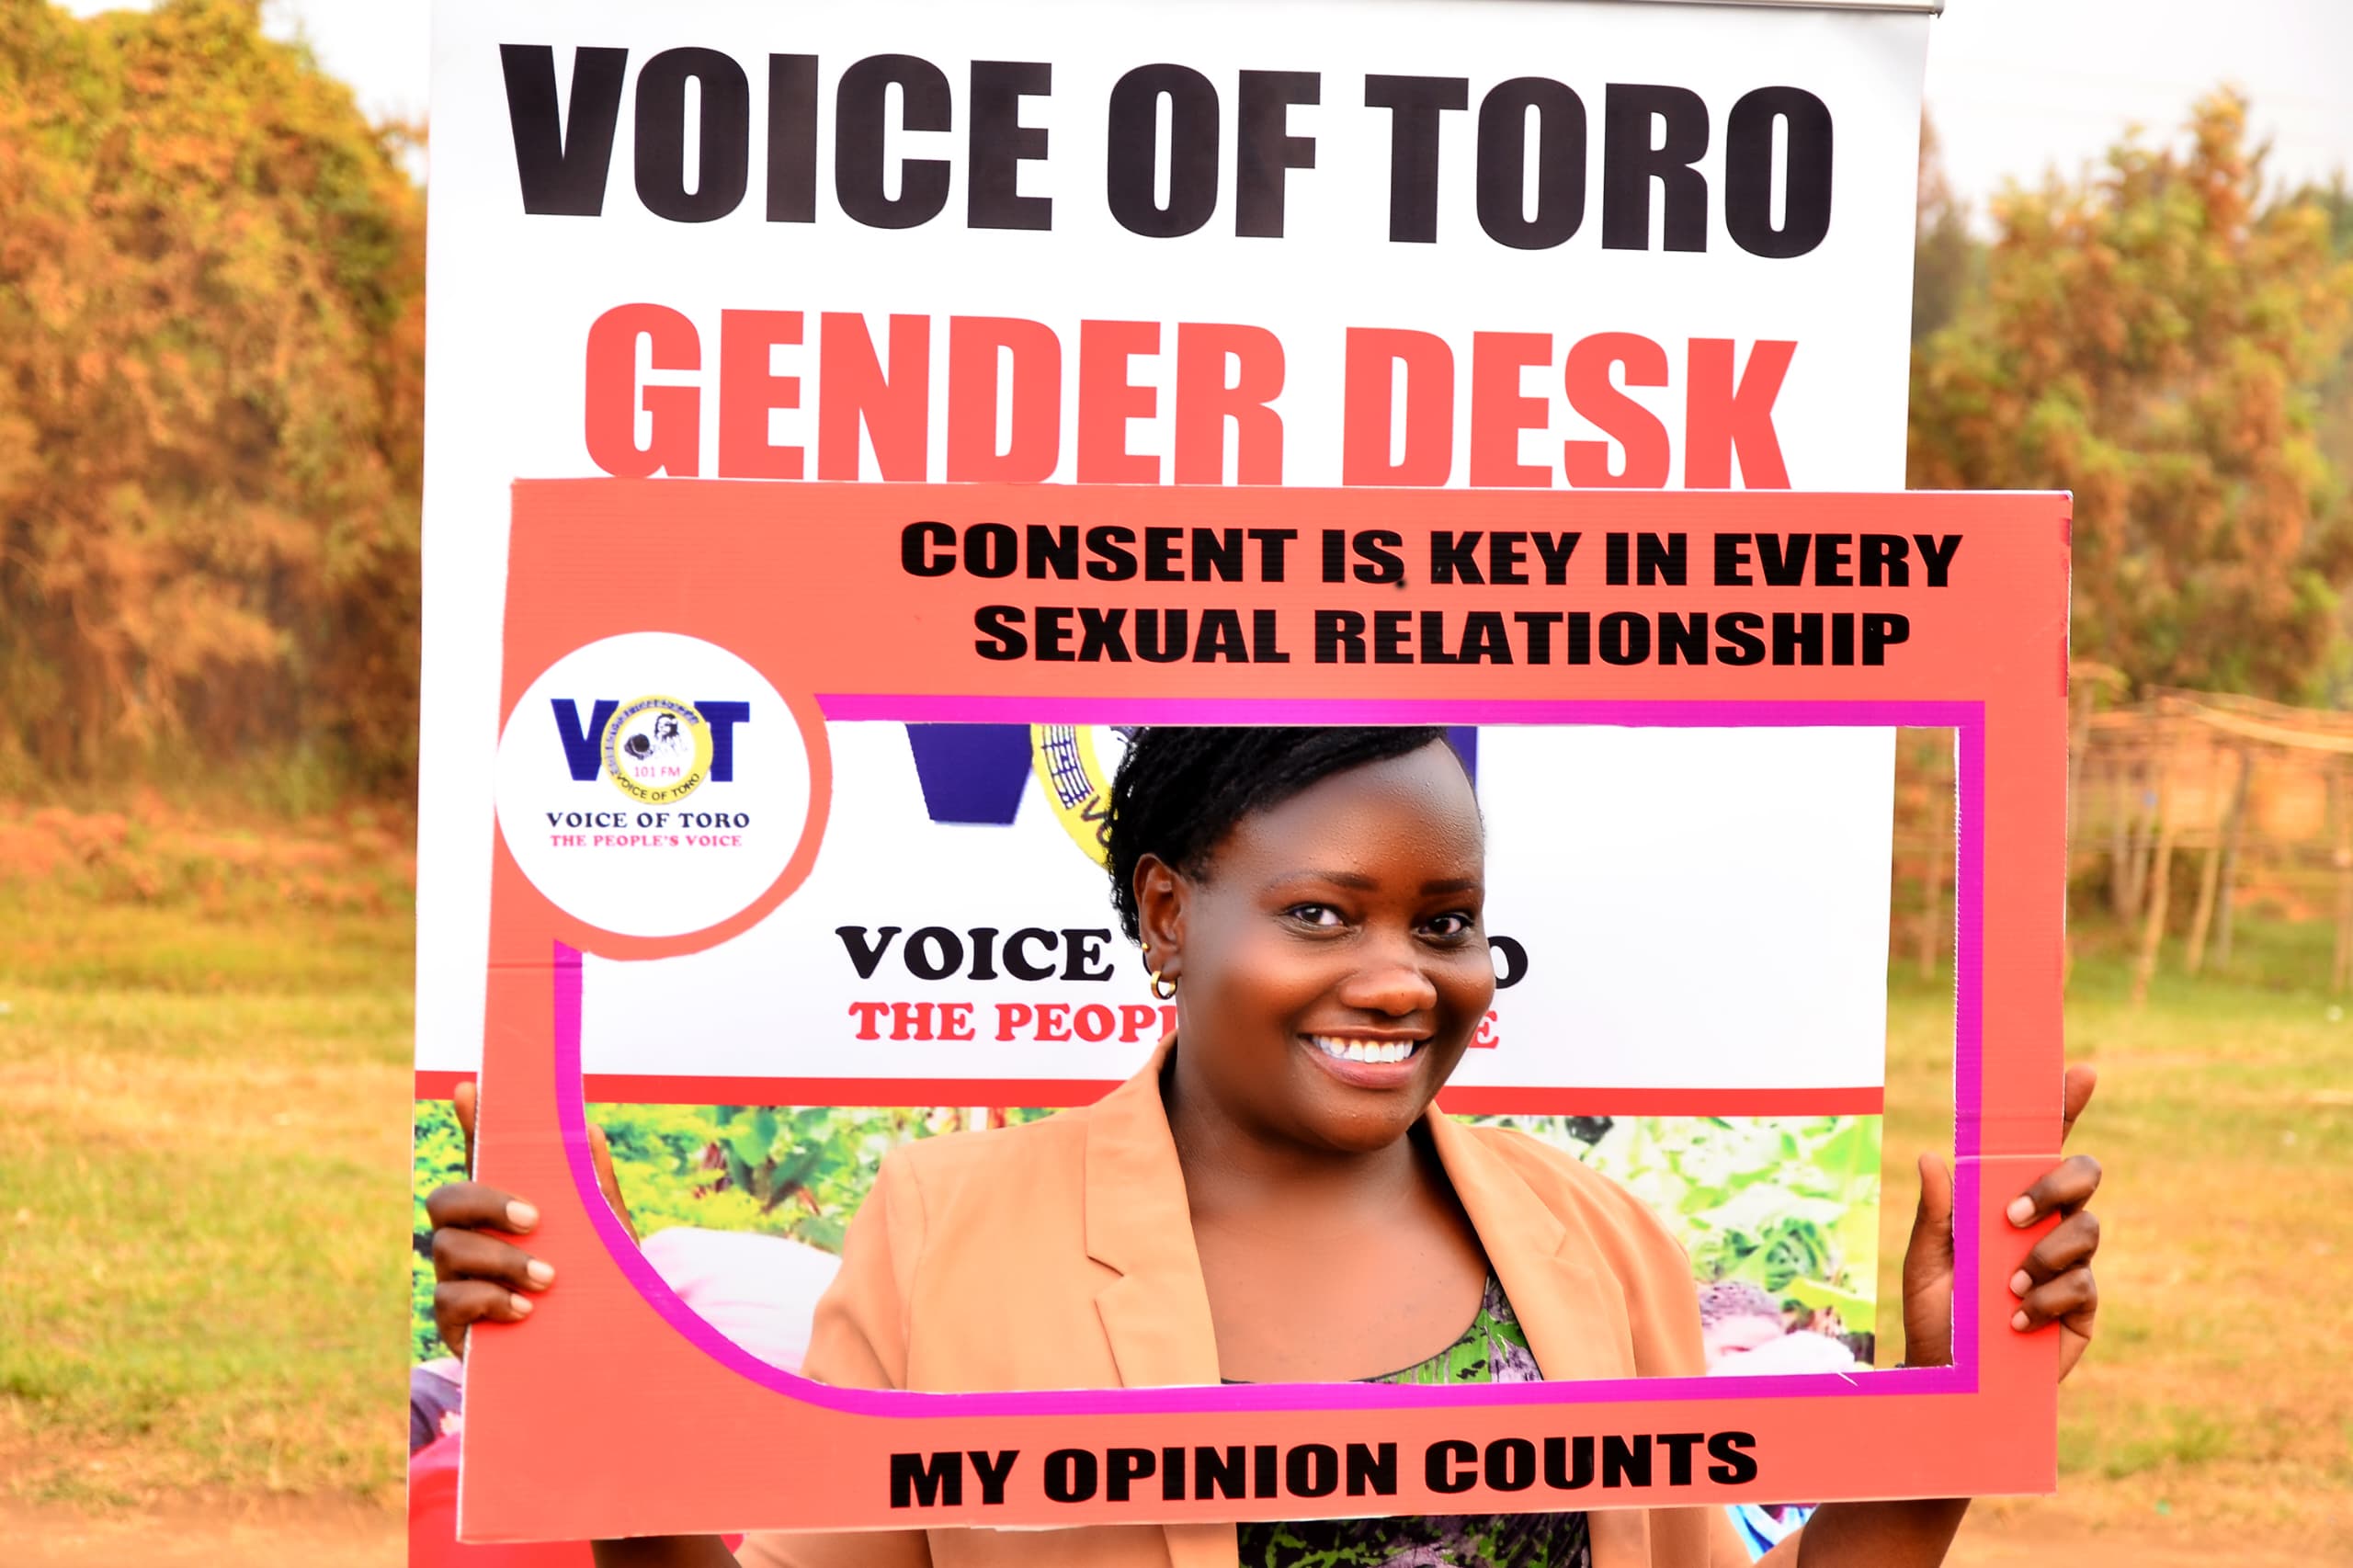 Voice of Toro pivots gender desks to transform cultural norms in western Uganda.